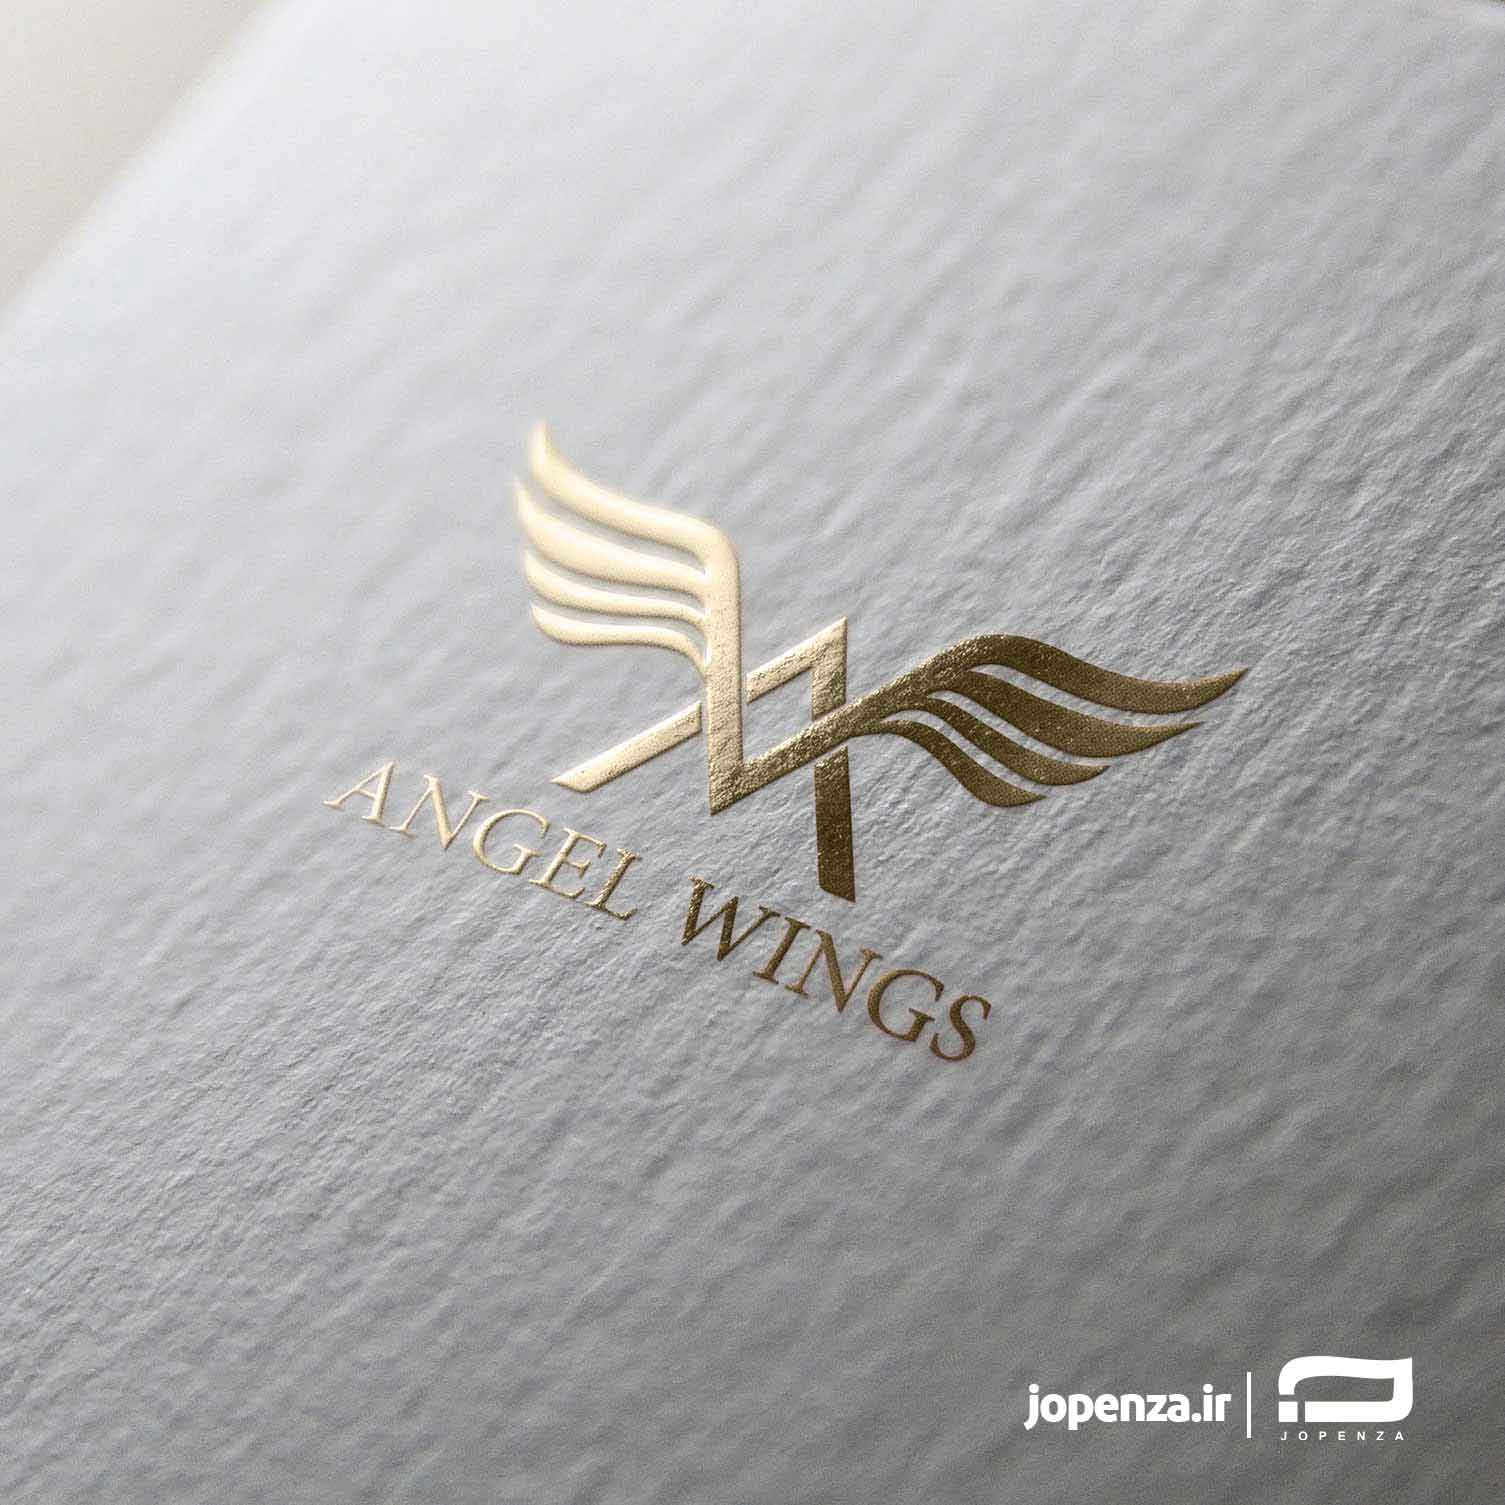 طراحی لوگو شرکت angel wings, طراحی لوگو, طراحی لوگو شرکتی